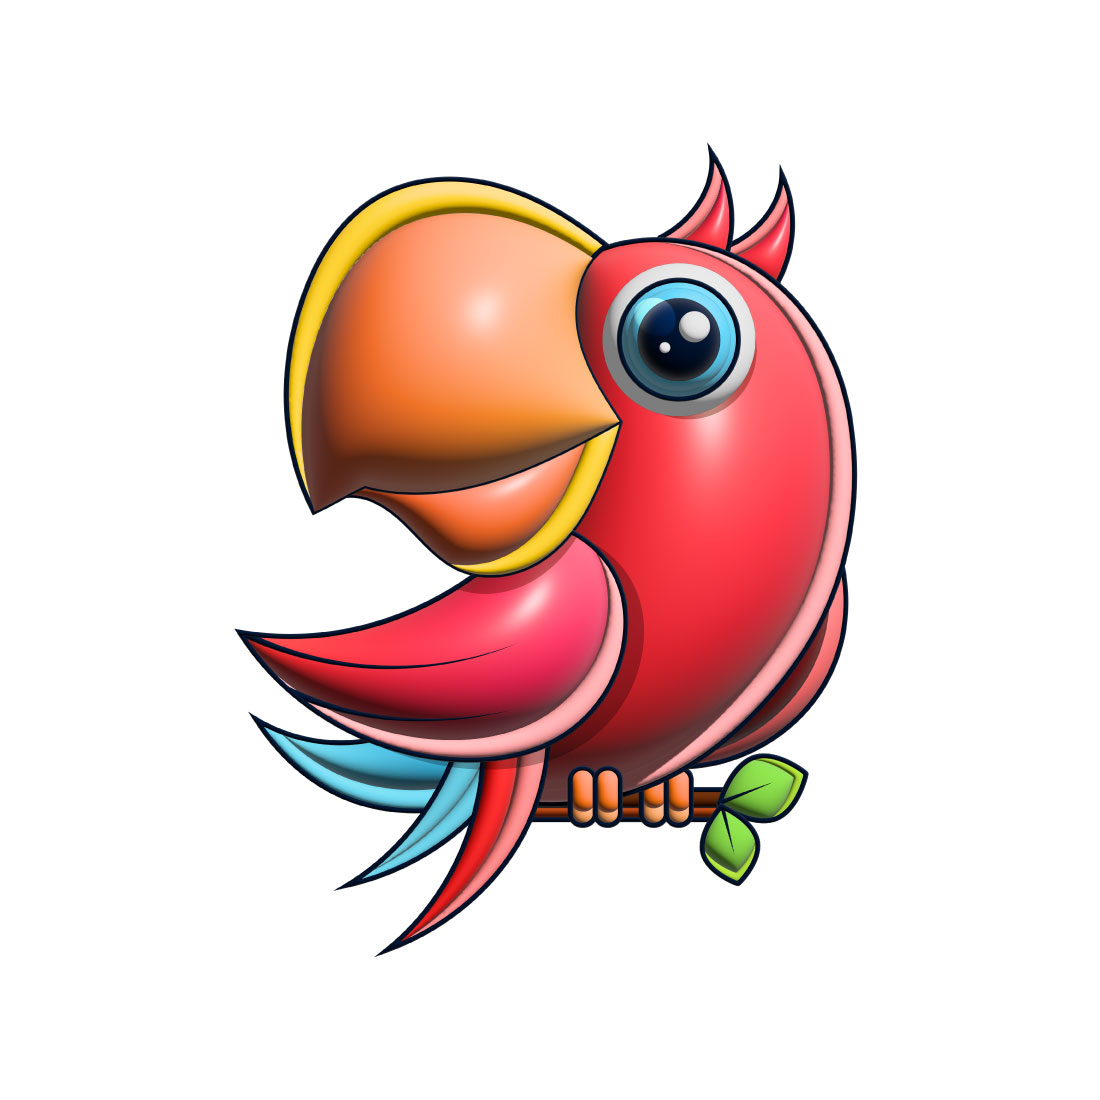 Parrot Logo Design cover image.